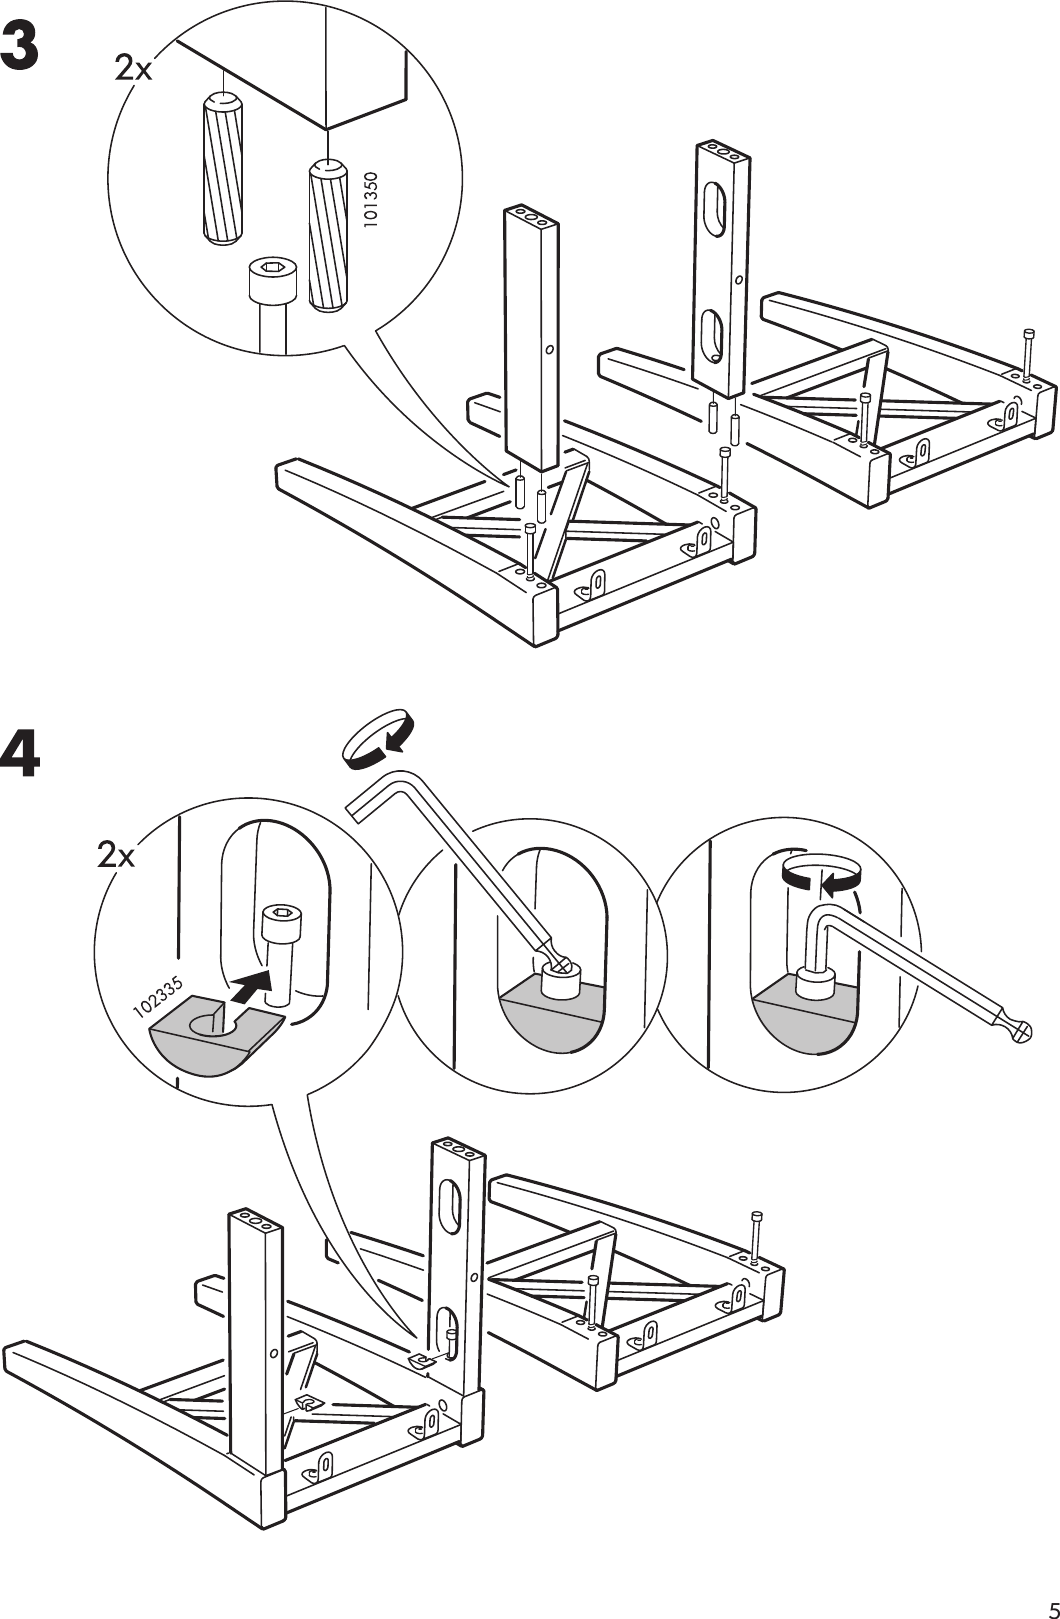 Page 5 of 8 - Ikea Ikea-Ingolf-Stool-Assembly-Instruction